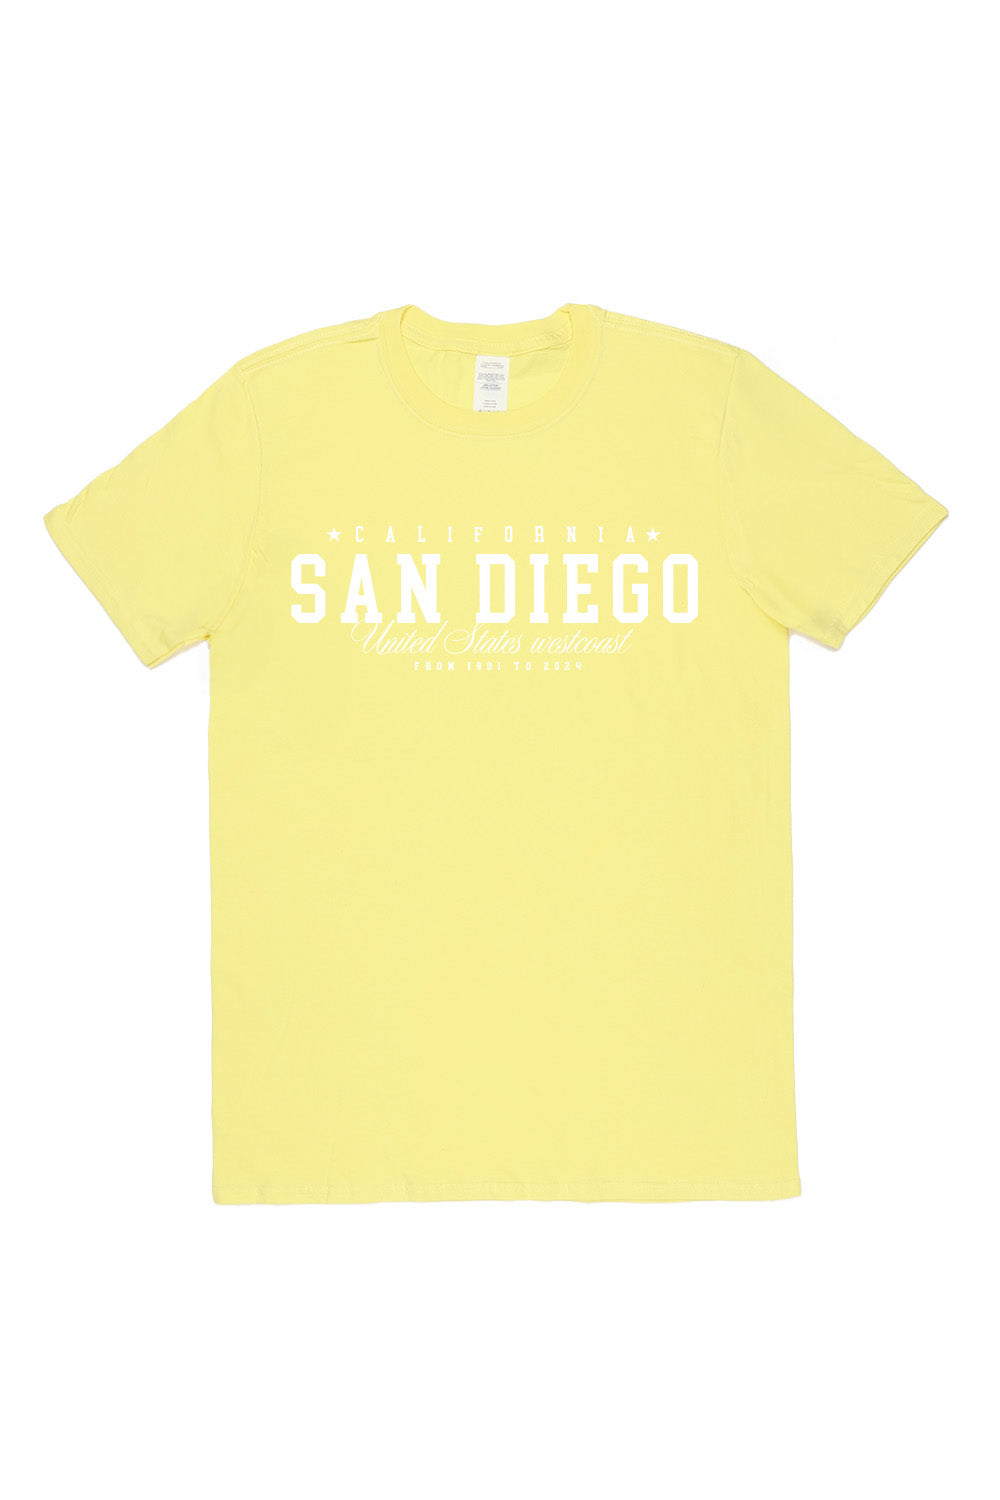 San Diego T-Shirt in Yellow (Custom Packs)